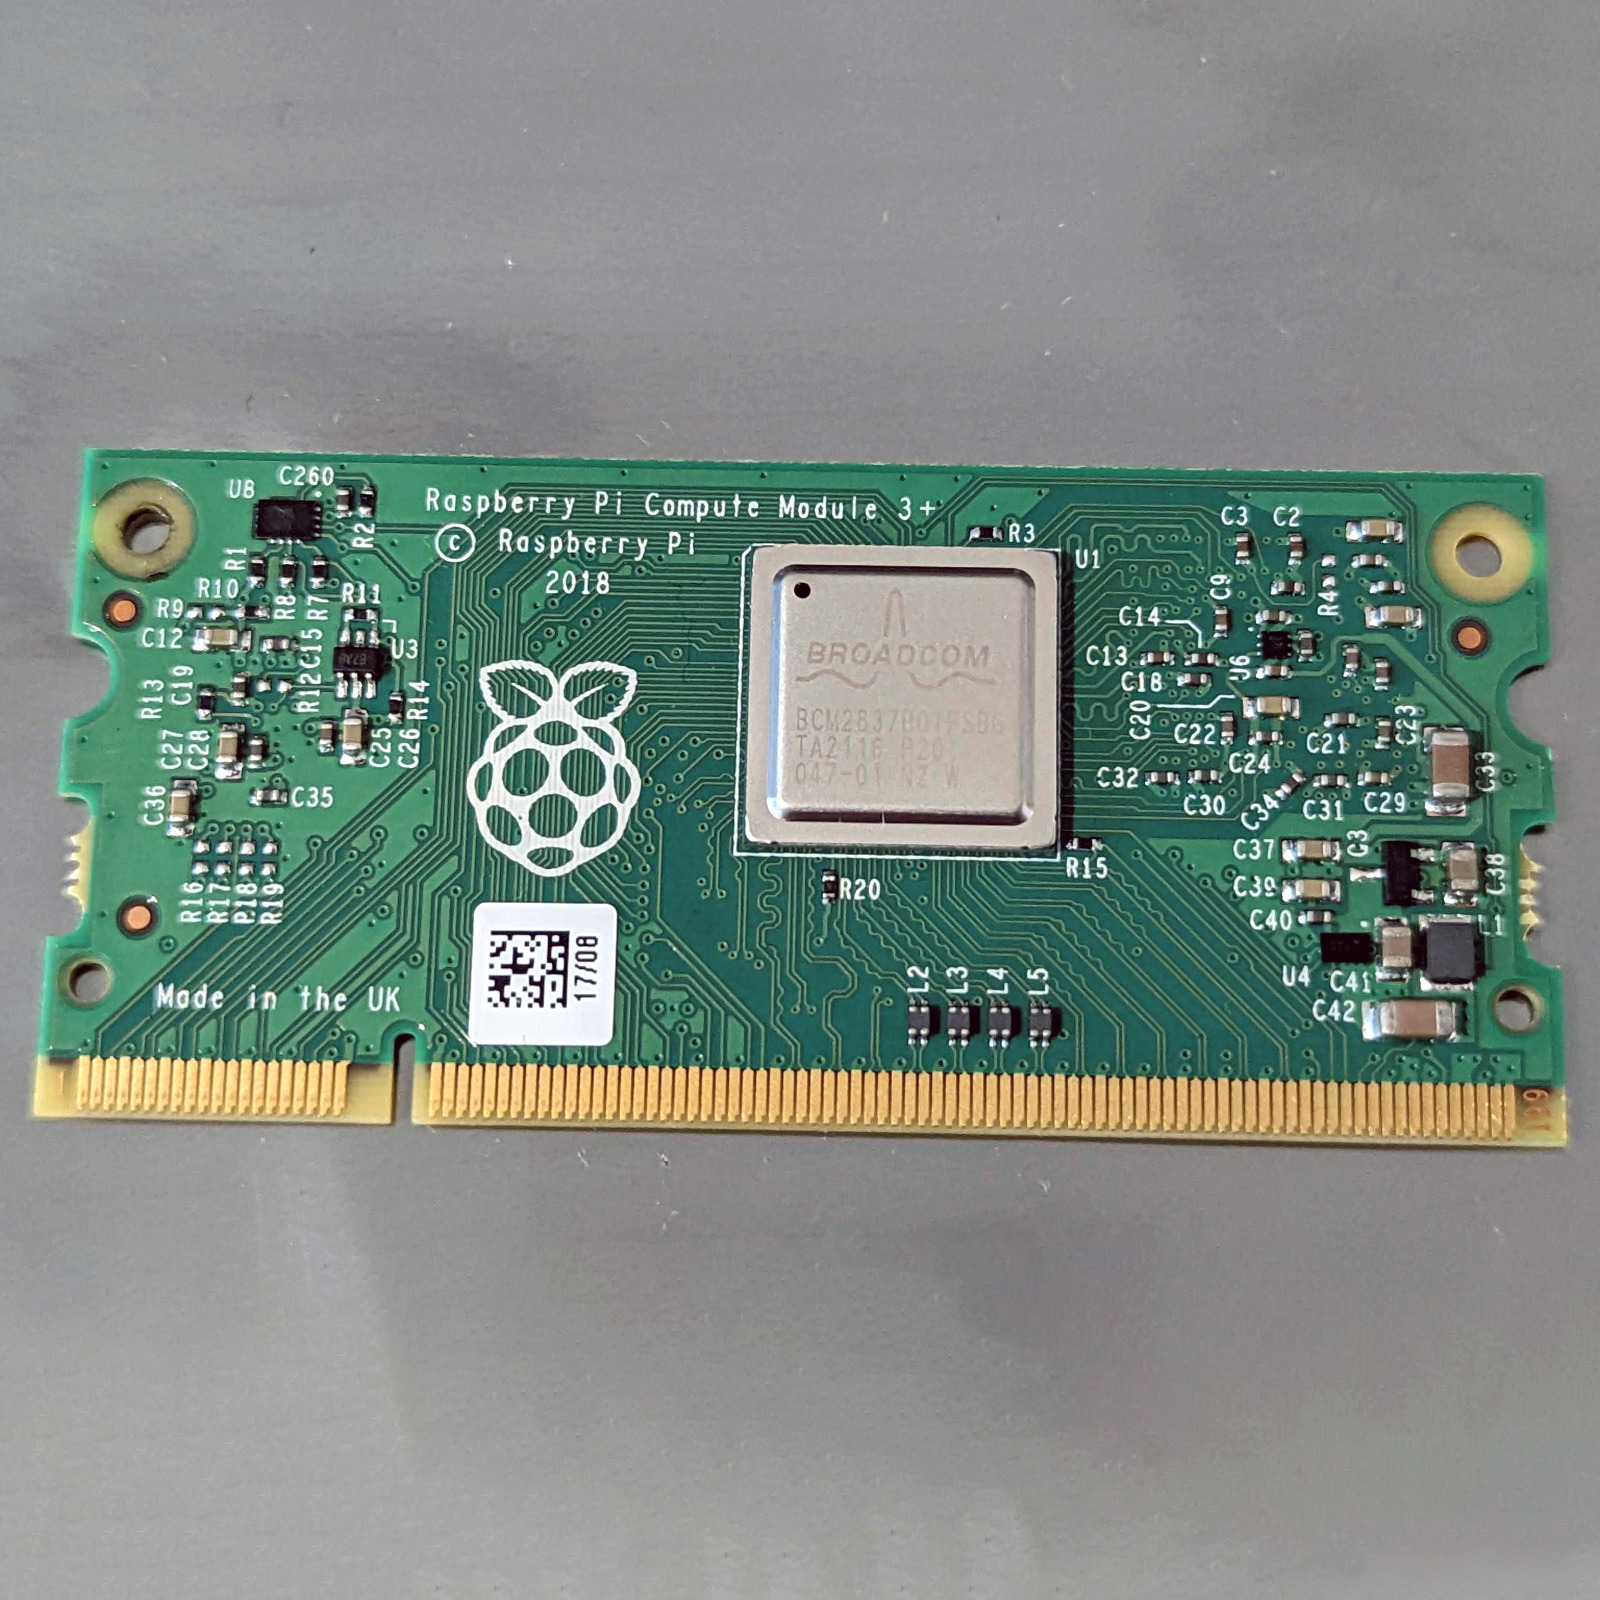 Raspberry Pi Compute Module 3+ (CM3+/8GB) - 8GB EMMC, 1GB RAM - USED, TESTED